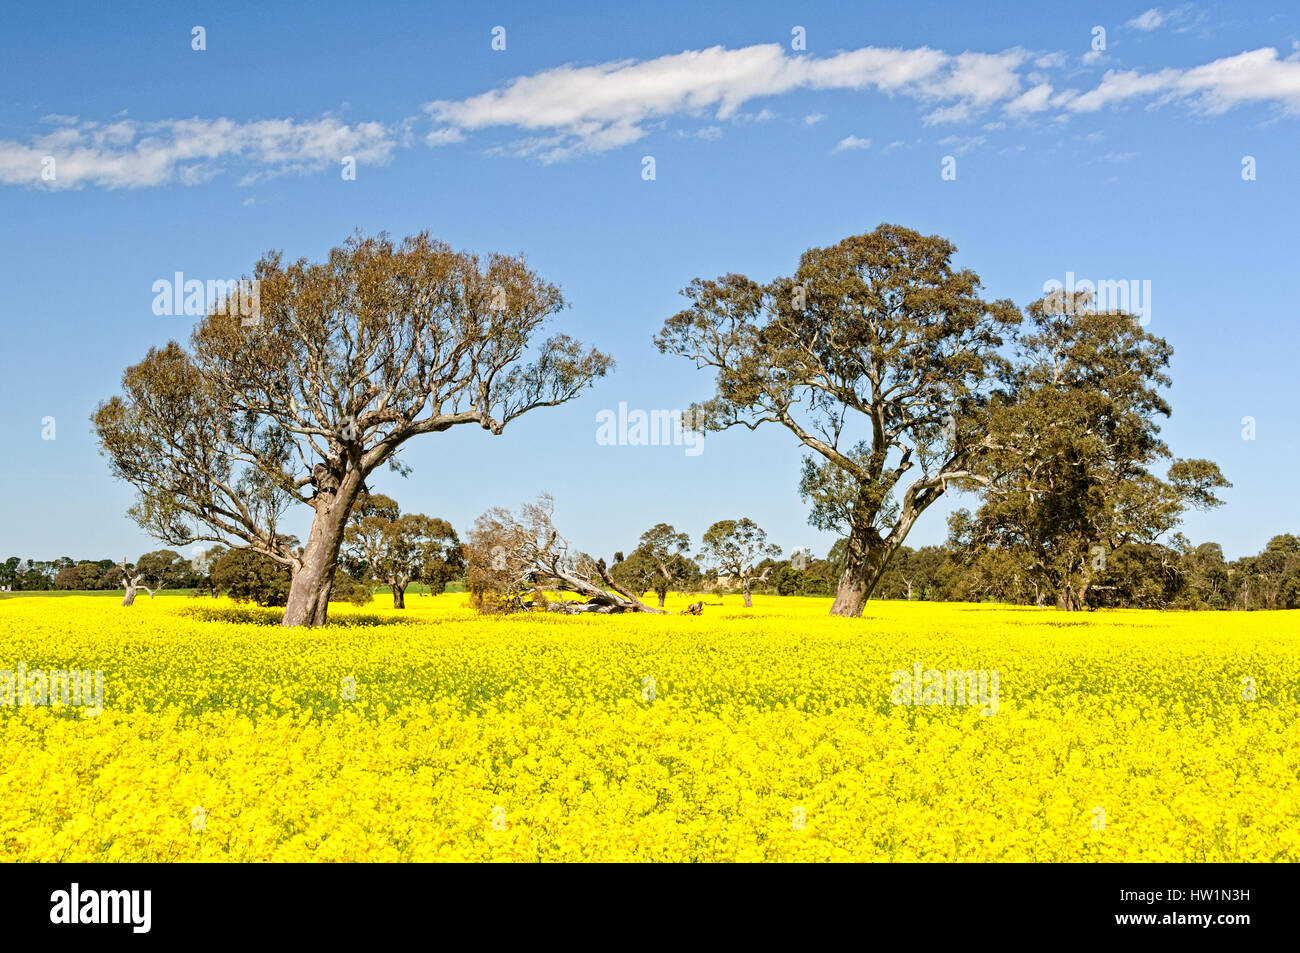 Gum trees in a field of canola in the Grampians, Victoria, Australia Stock Photo